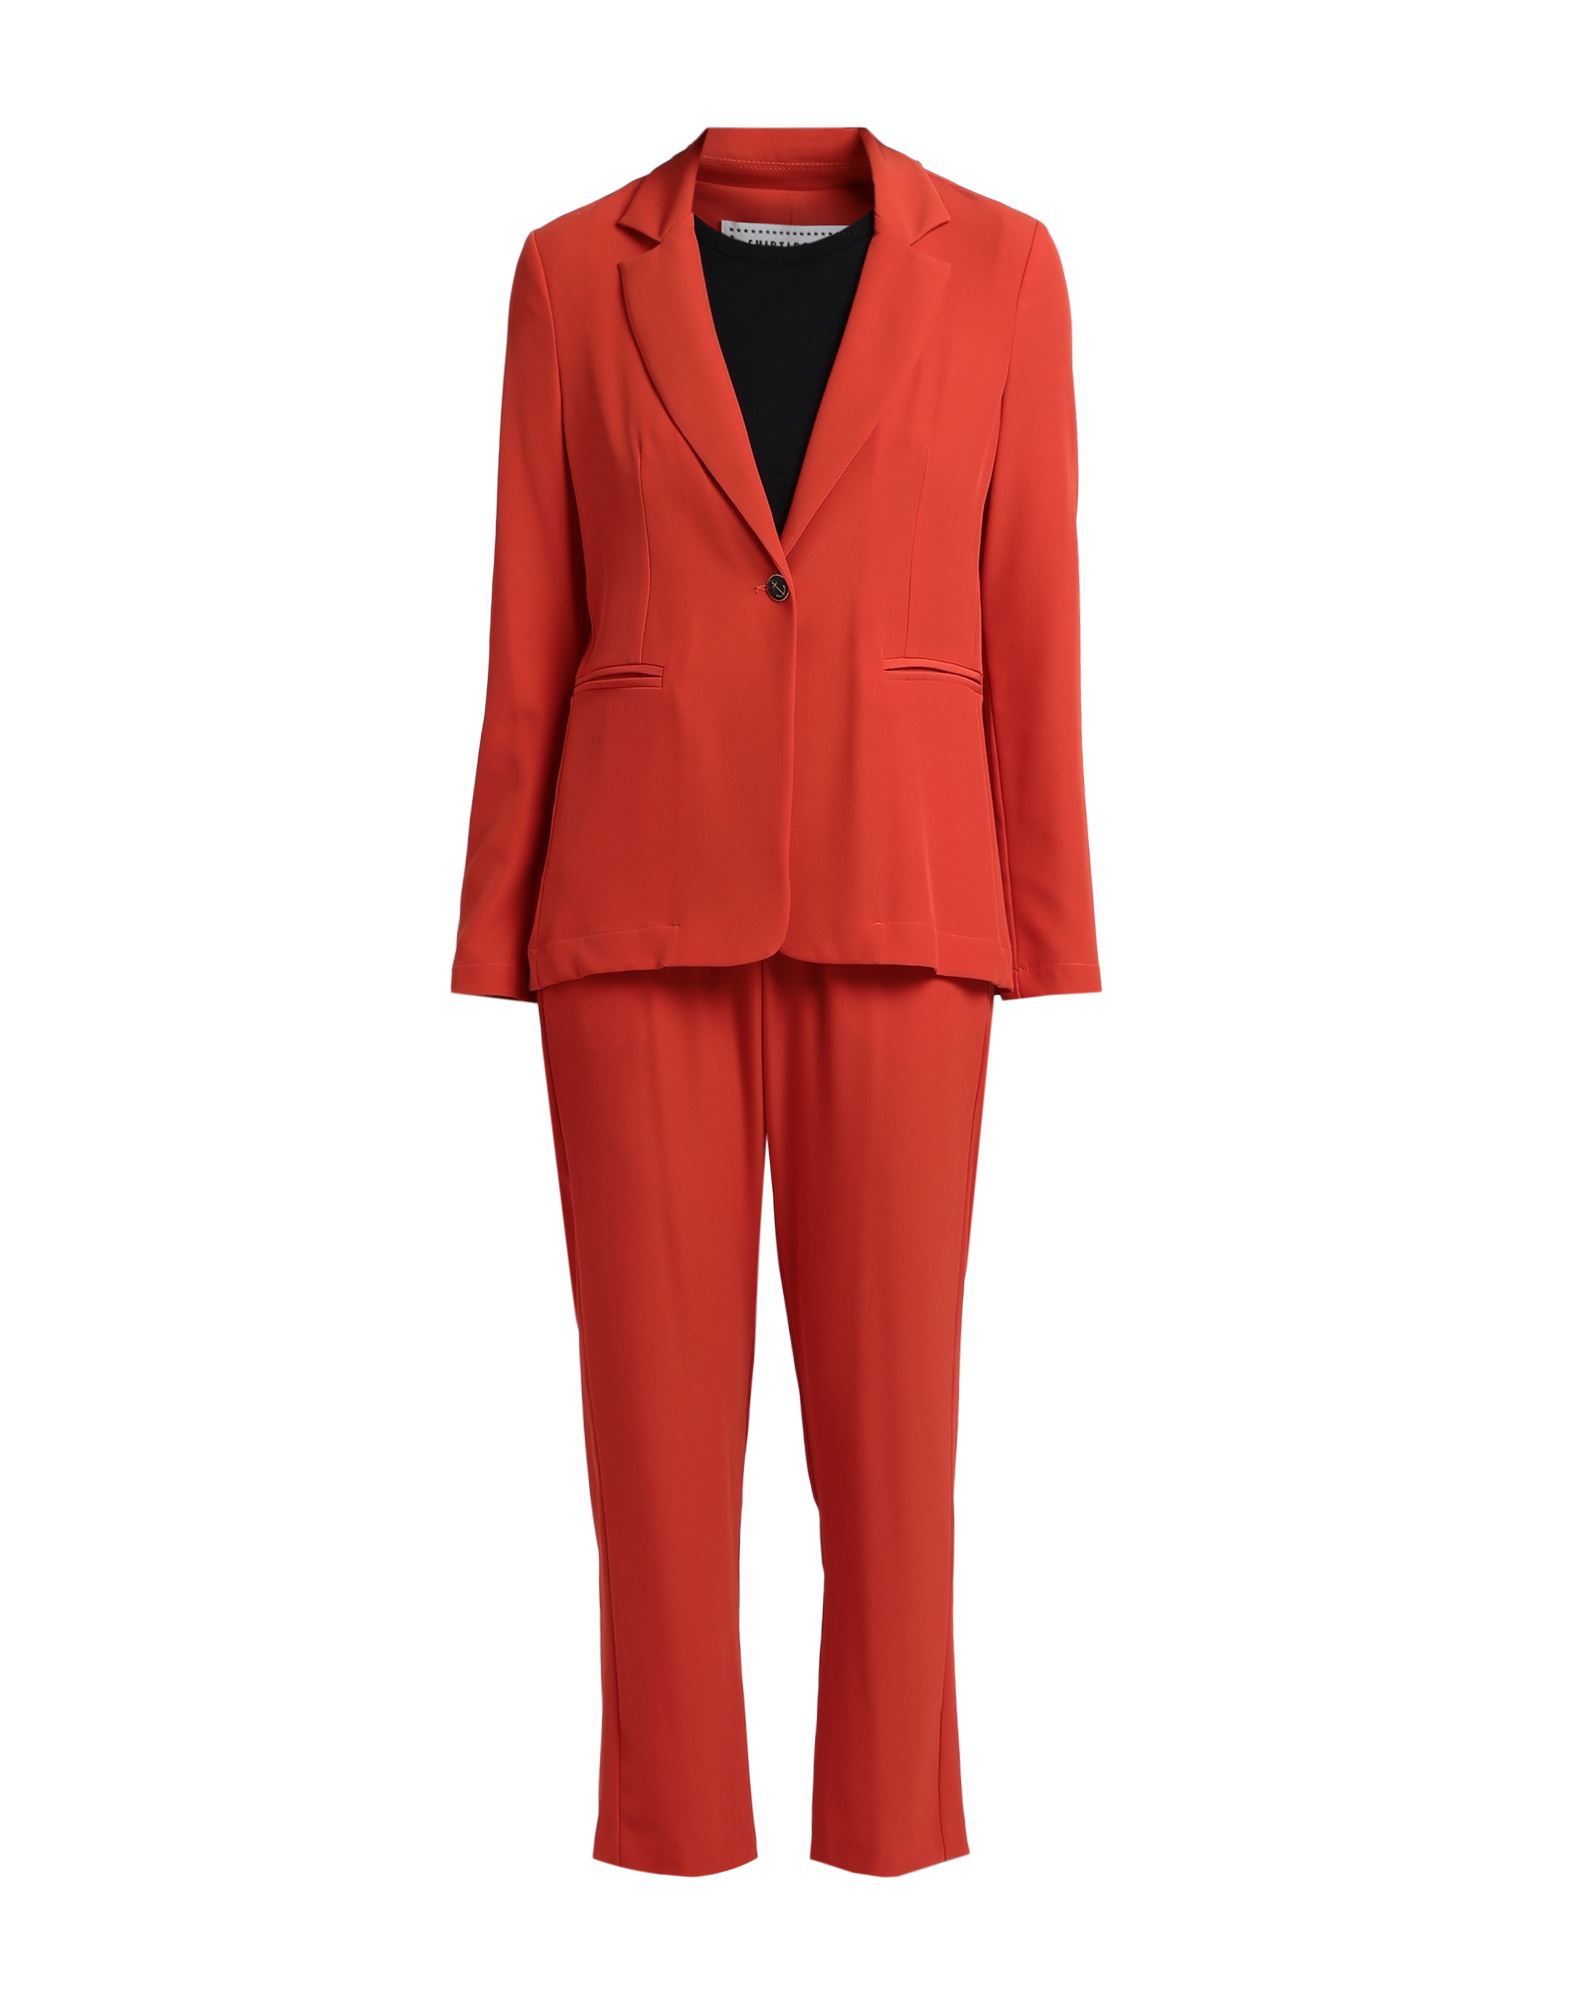 Shirtaporter Suits In Orange